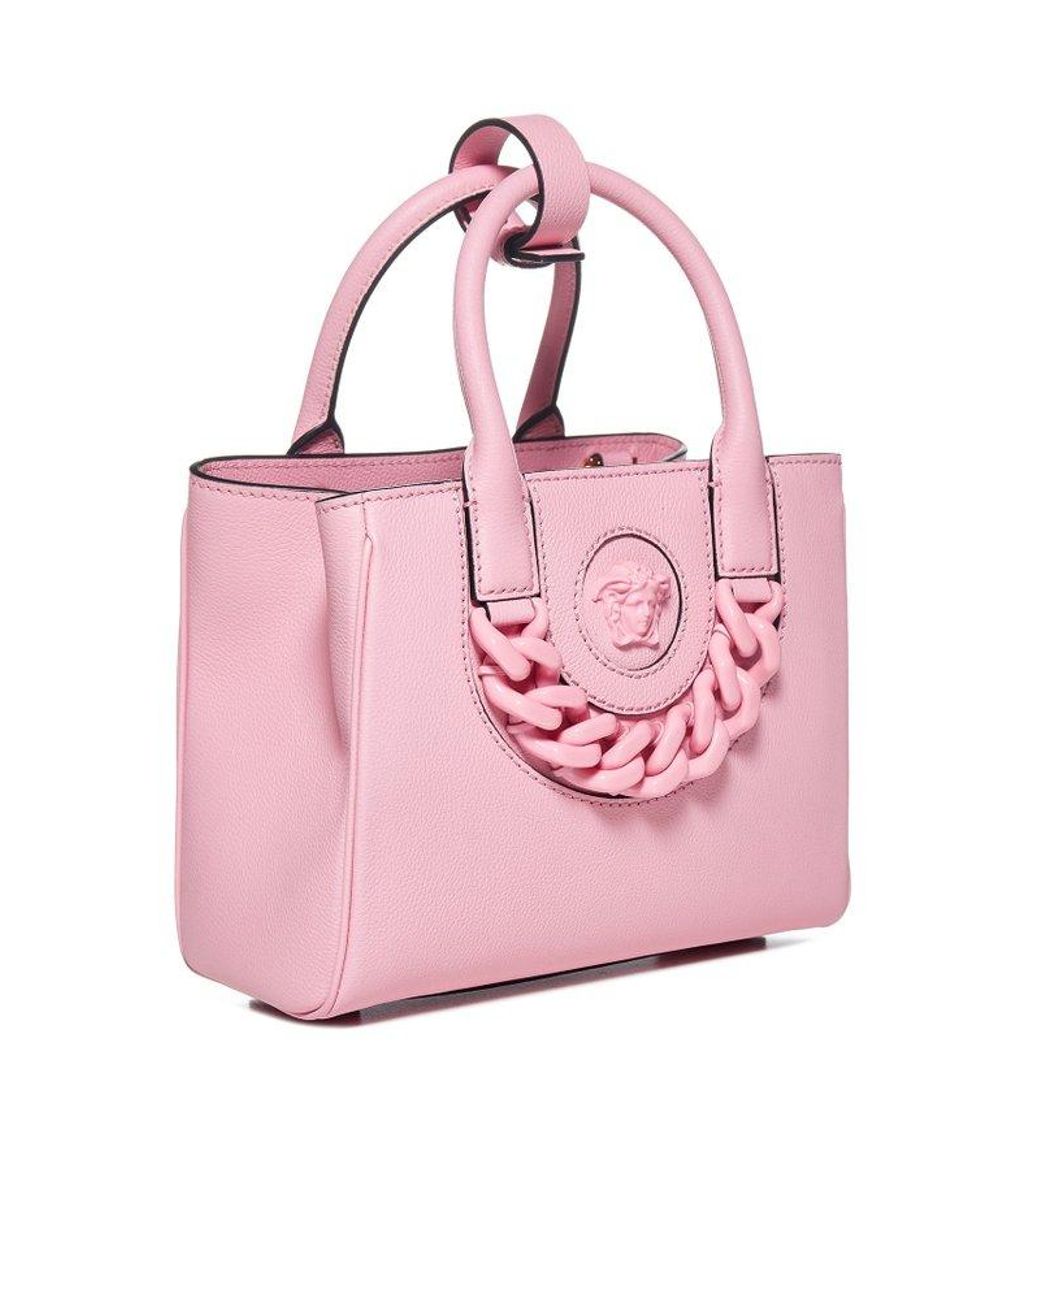 Merona Feminine Crossbody pink bag with chain